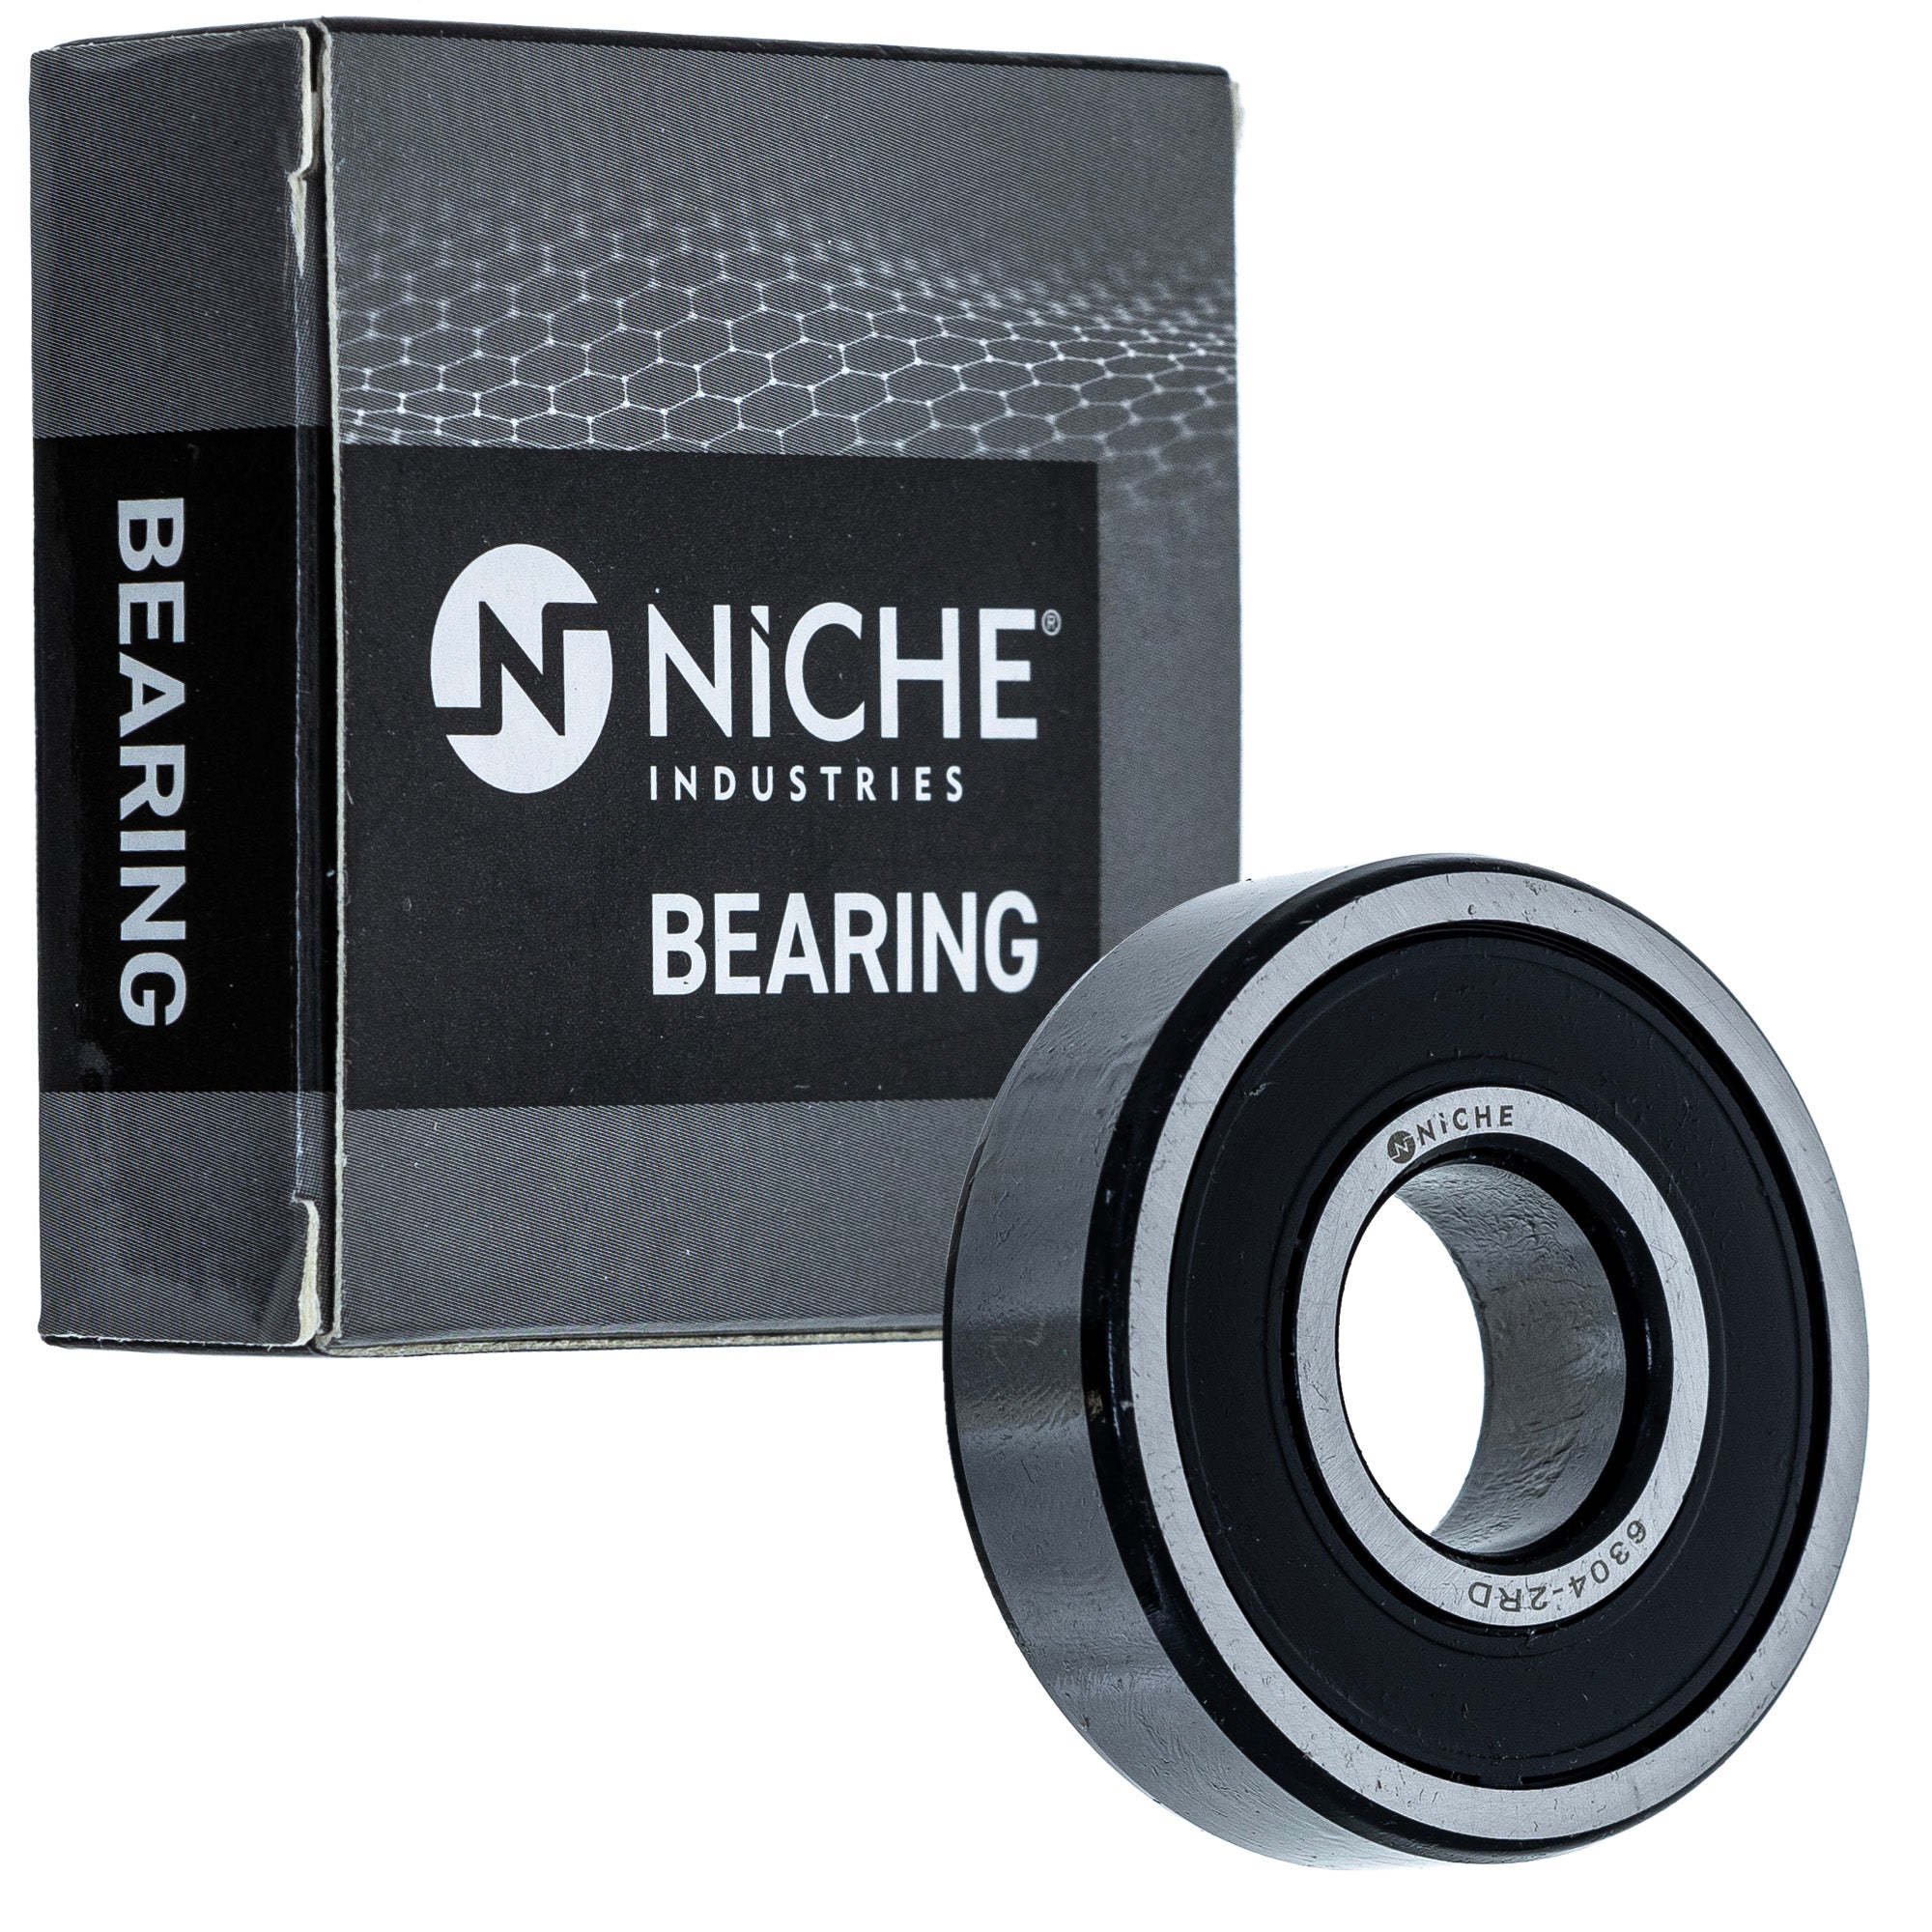 NICHE 519-CBB2207R Bearing for zOTHER XS400 XR650R XR600R XR350R